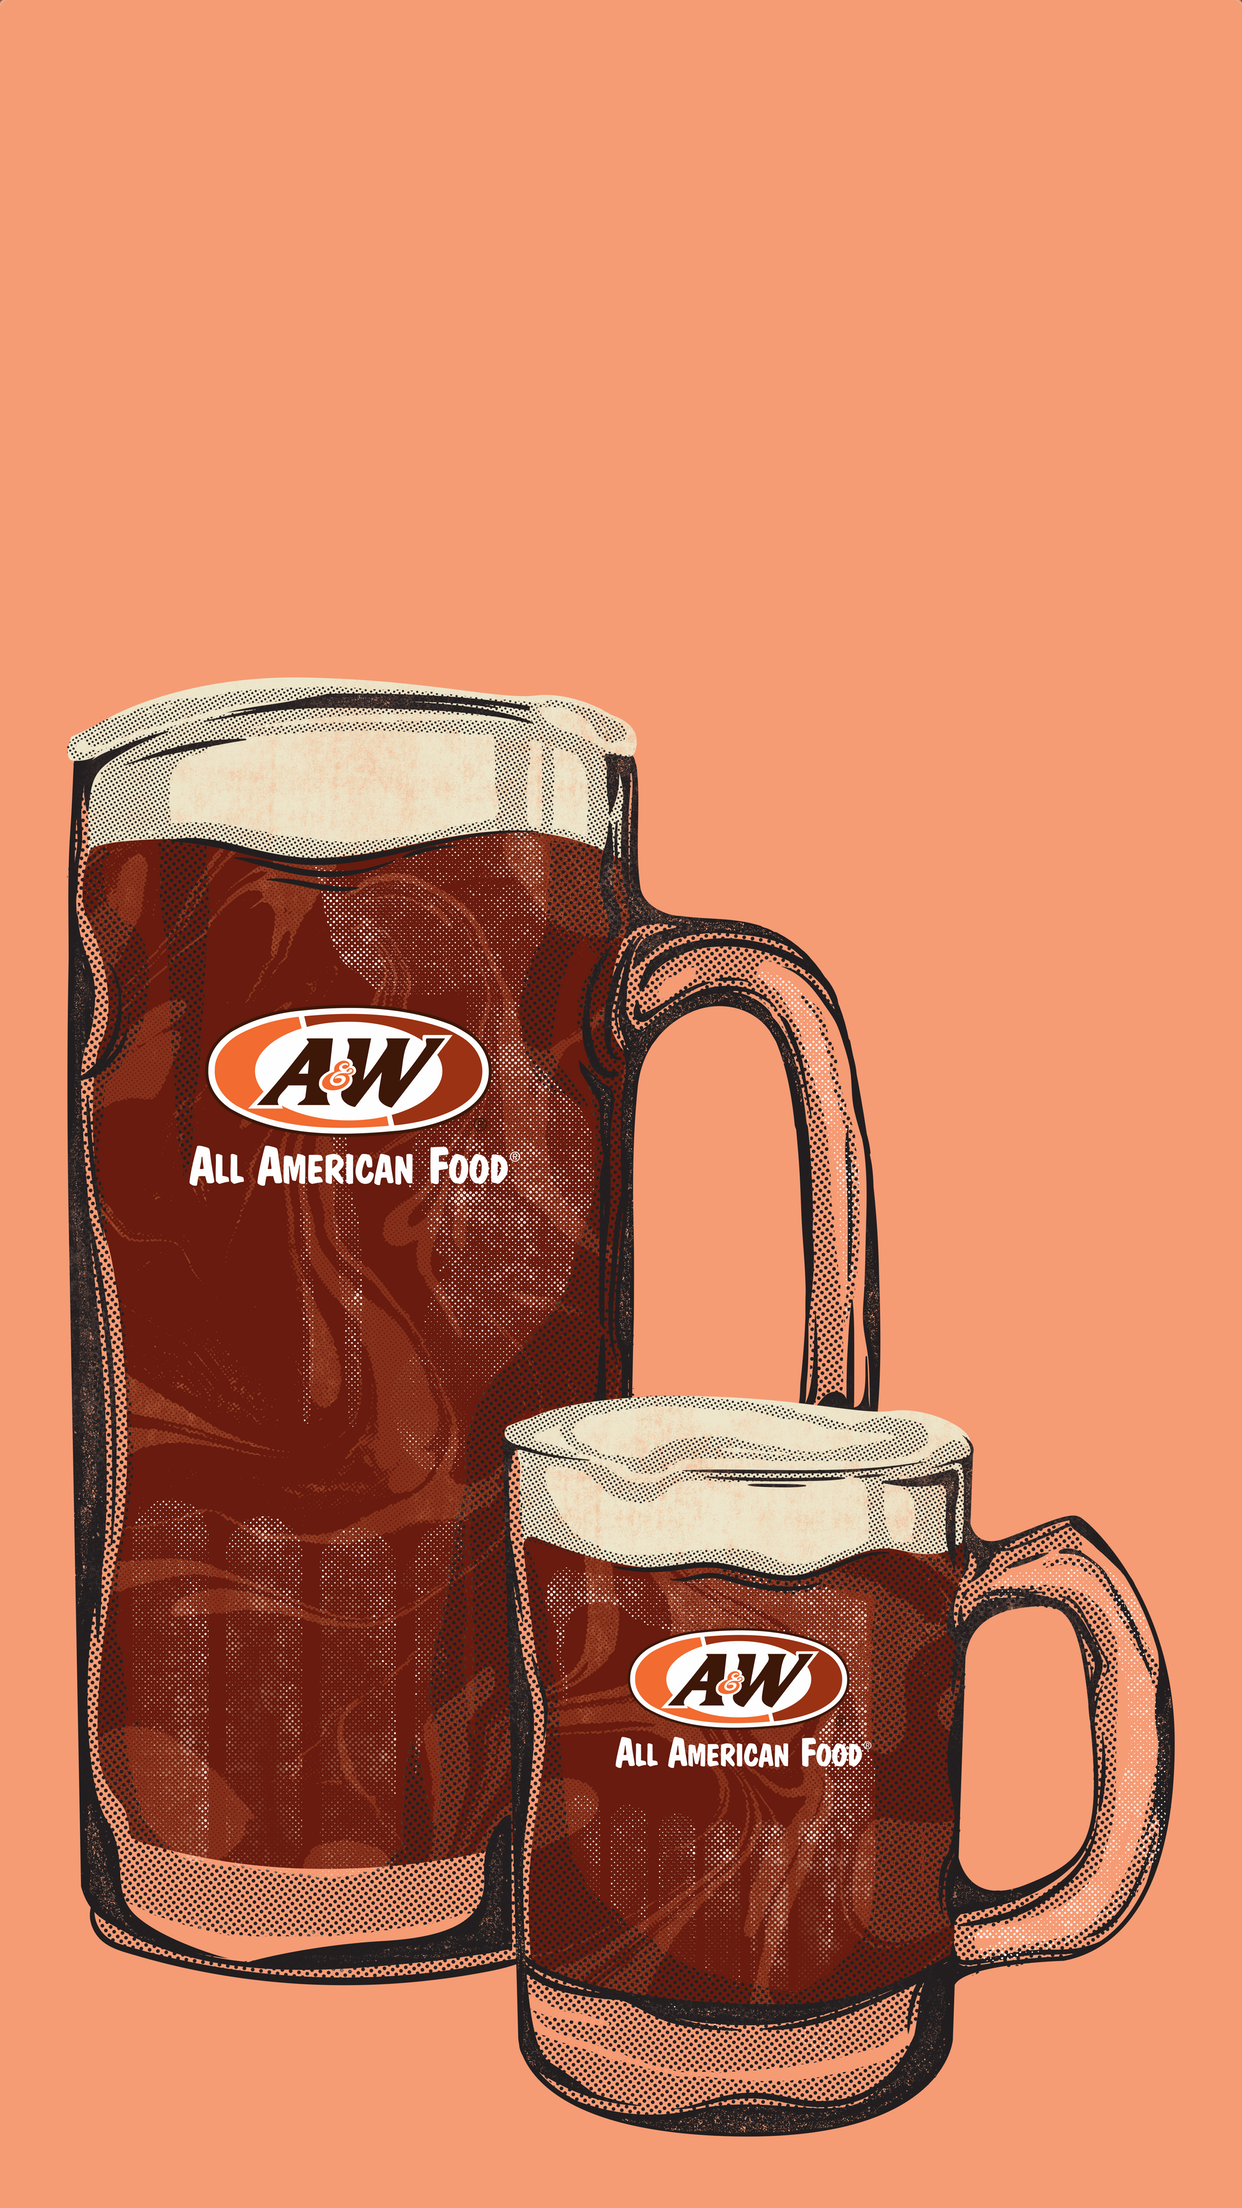 Two Root Beer Mugs on orange background